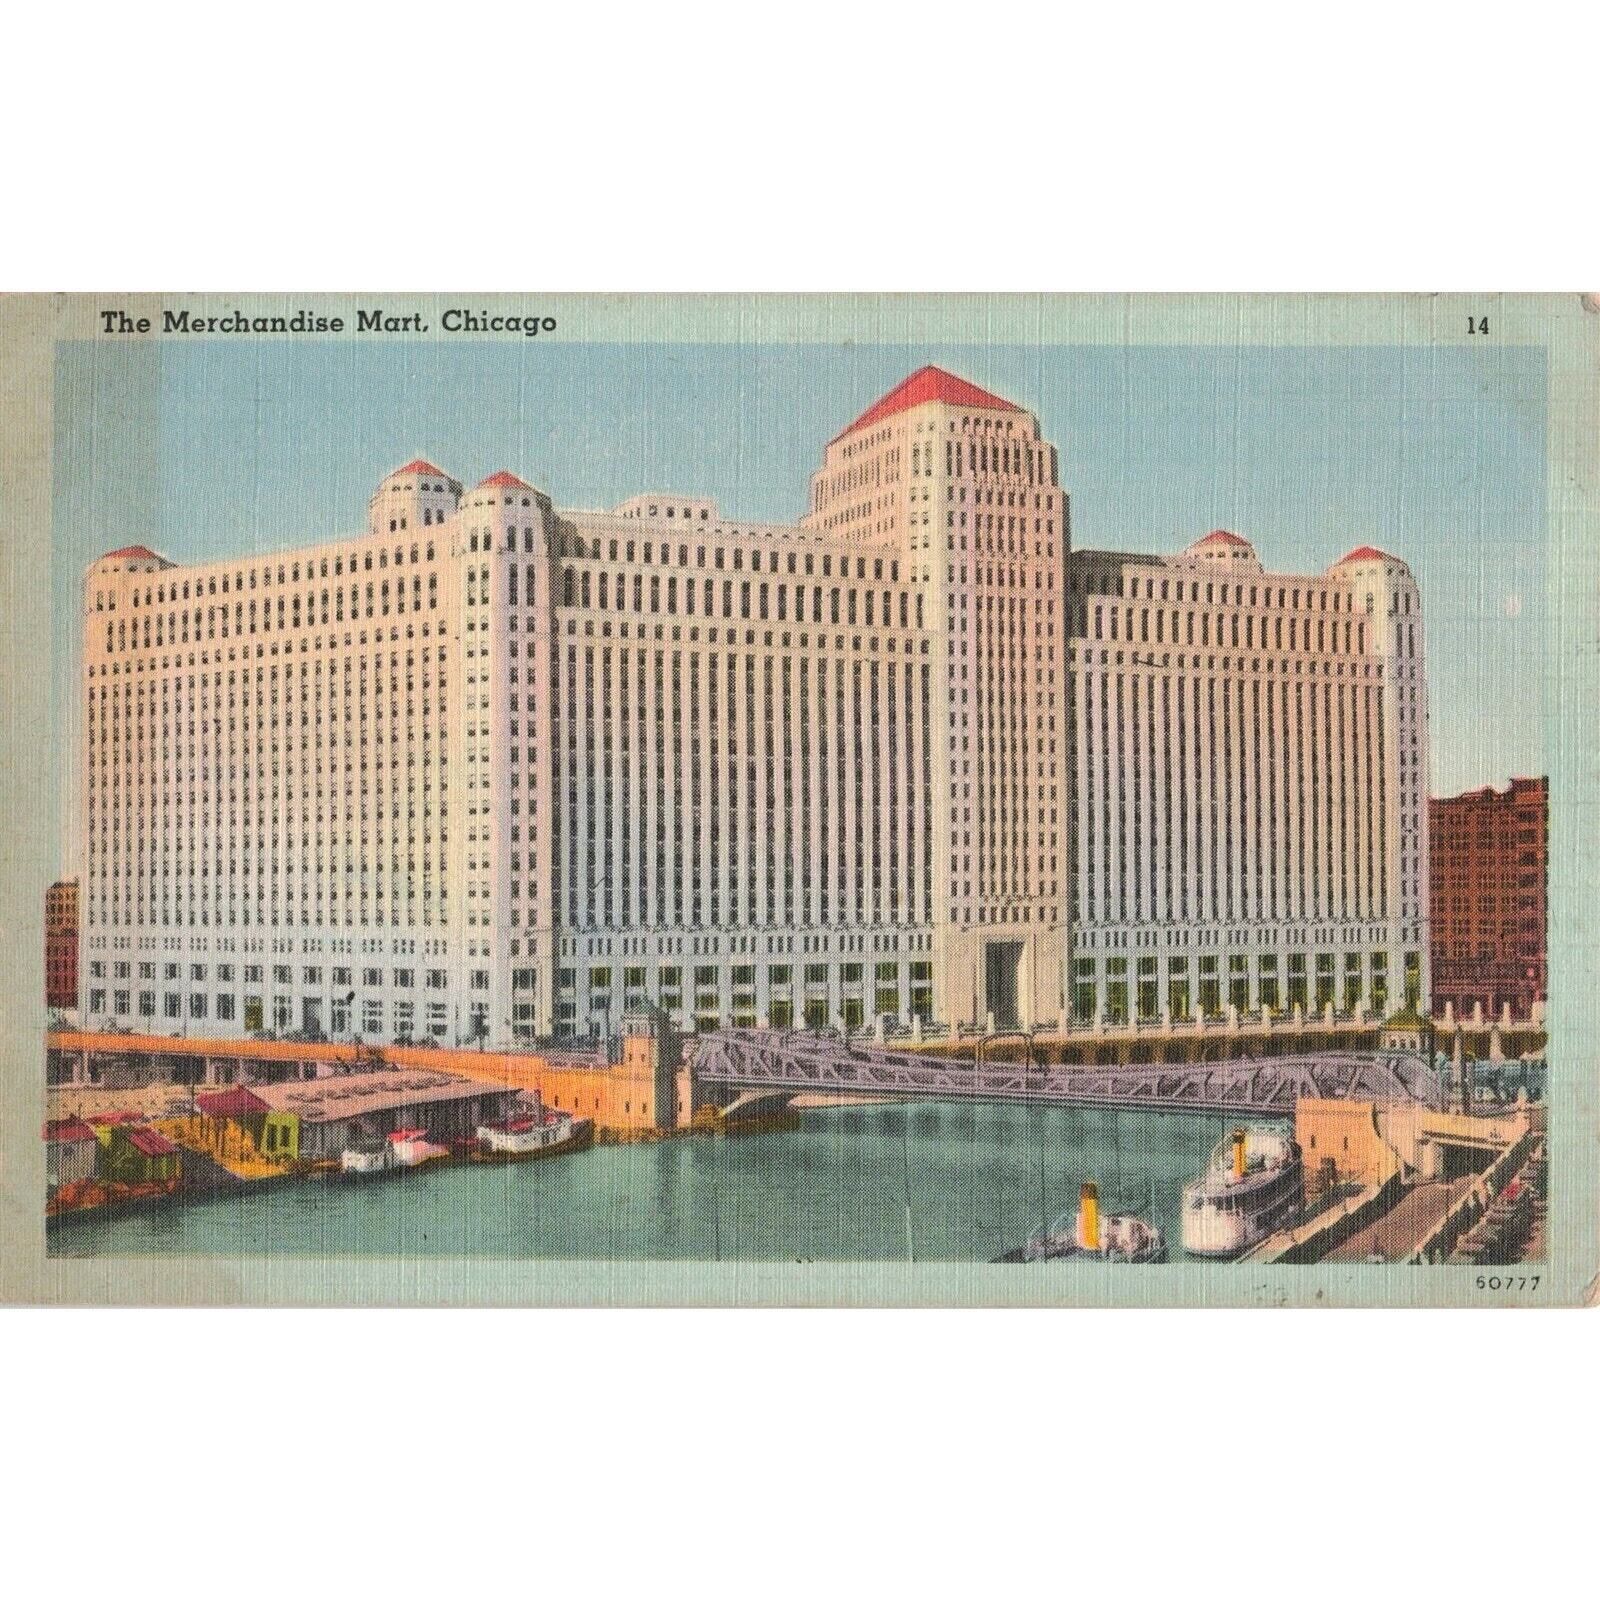 Canal Ferry Ships Boats Bridge Merchandise Mart Chicago c1945  Postcard 2T5-485